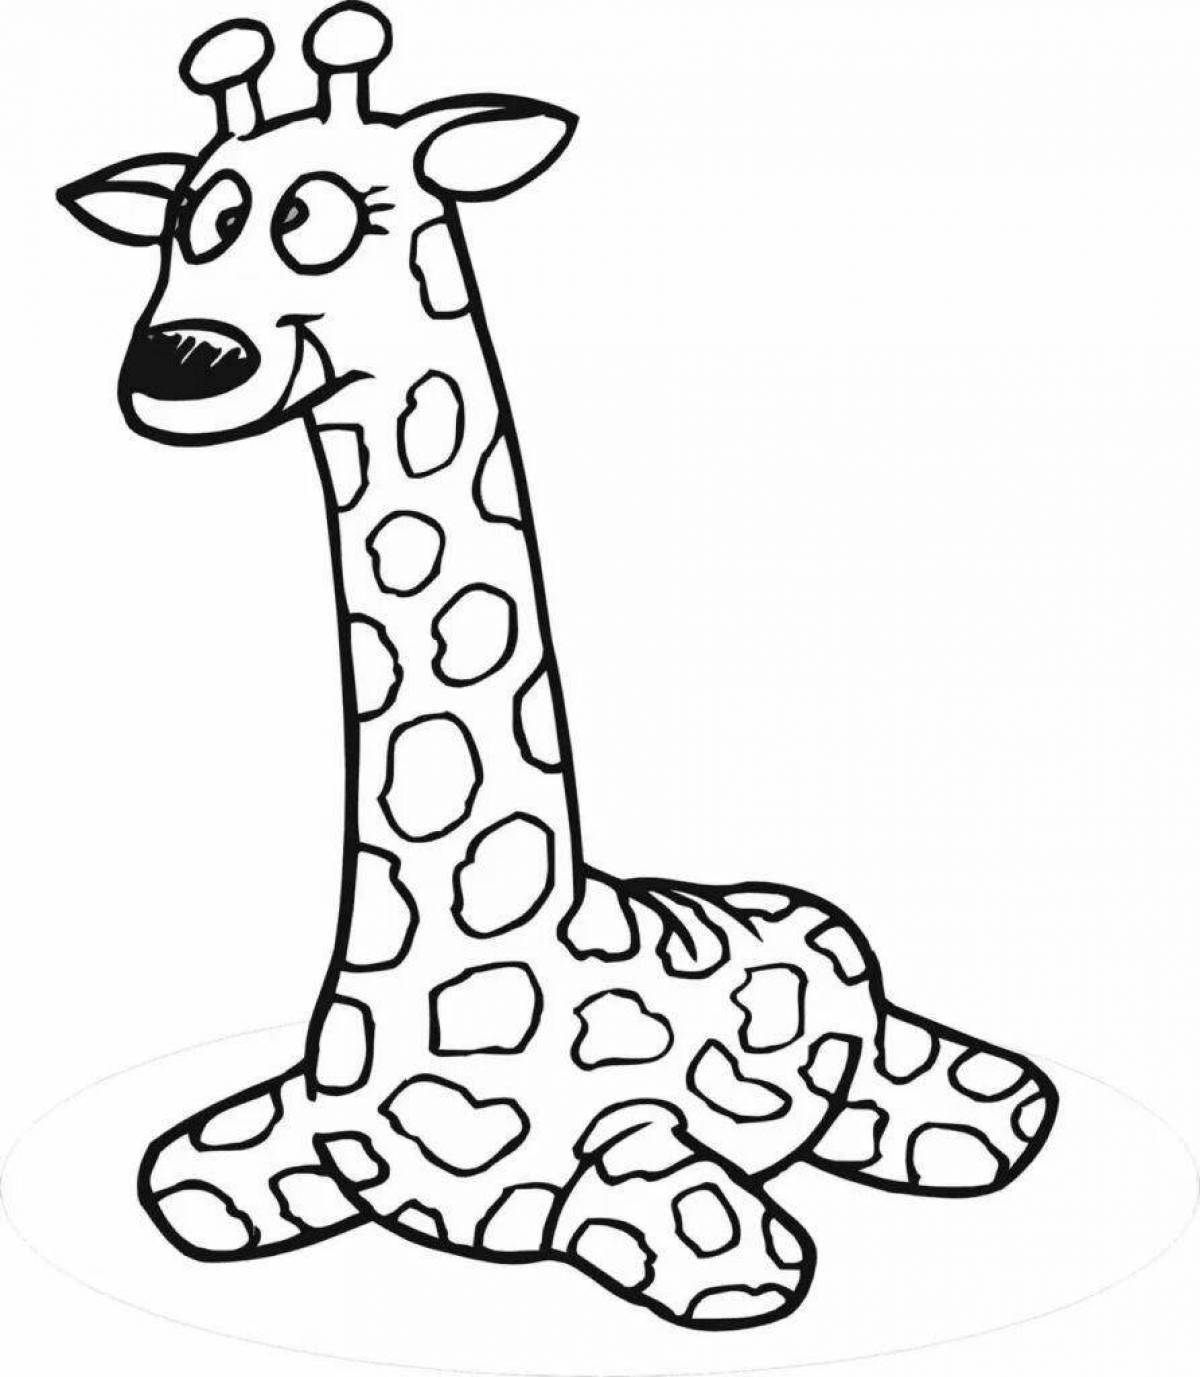 Giraffe fun coloring book for 2-3 year olds